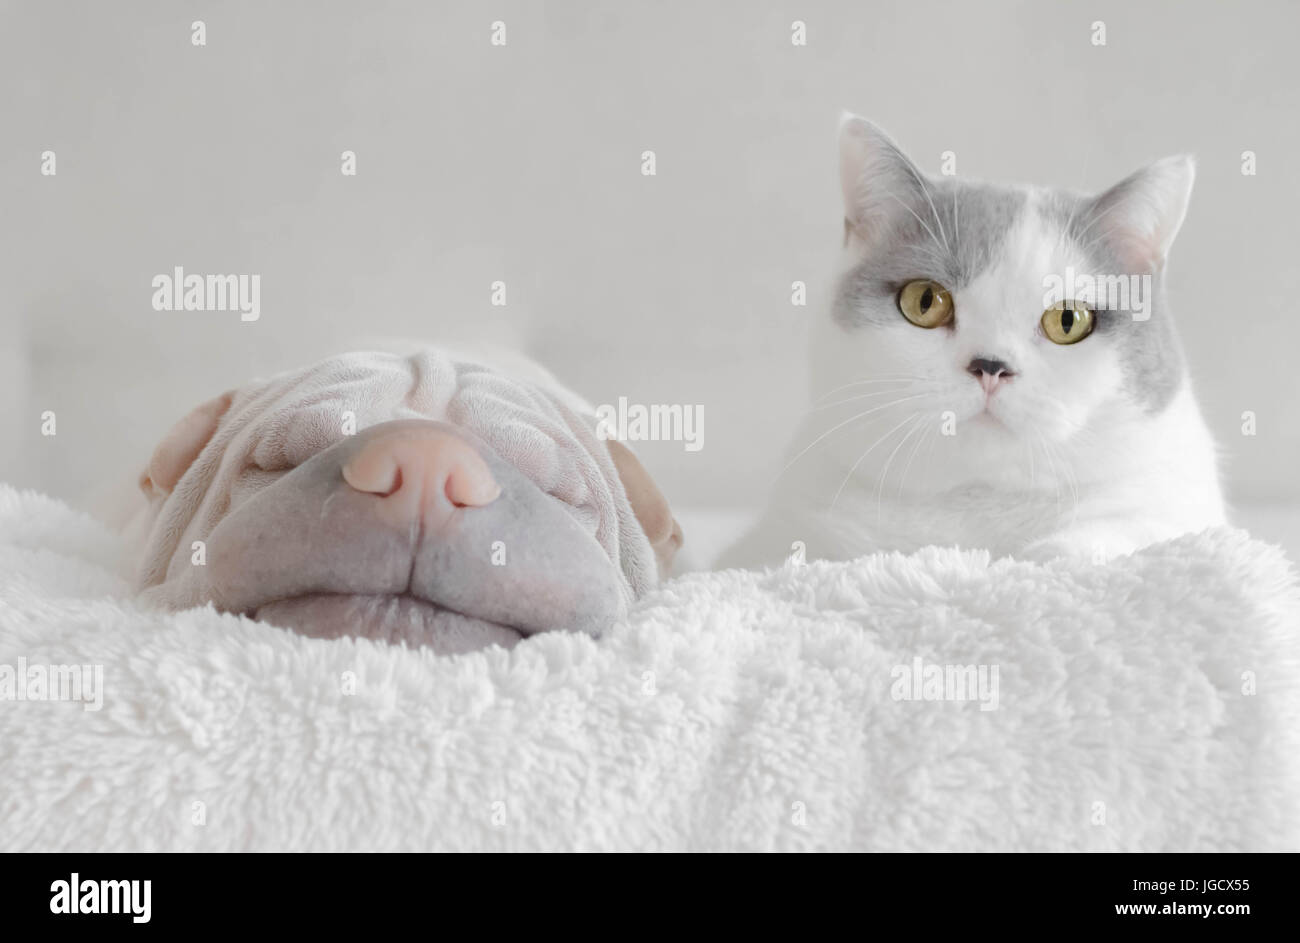 British shorthair Cat and shar pei dog lying on a blanket Stock Photo